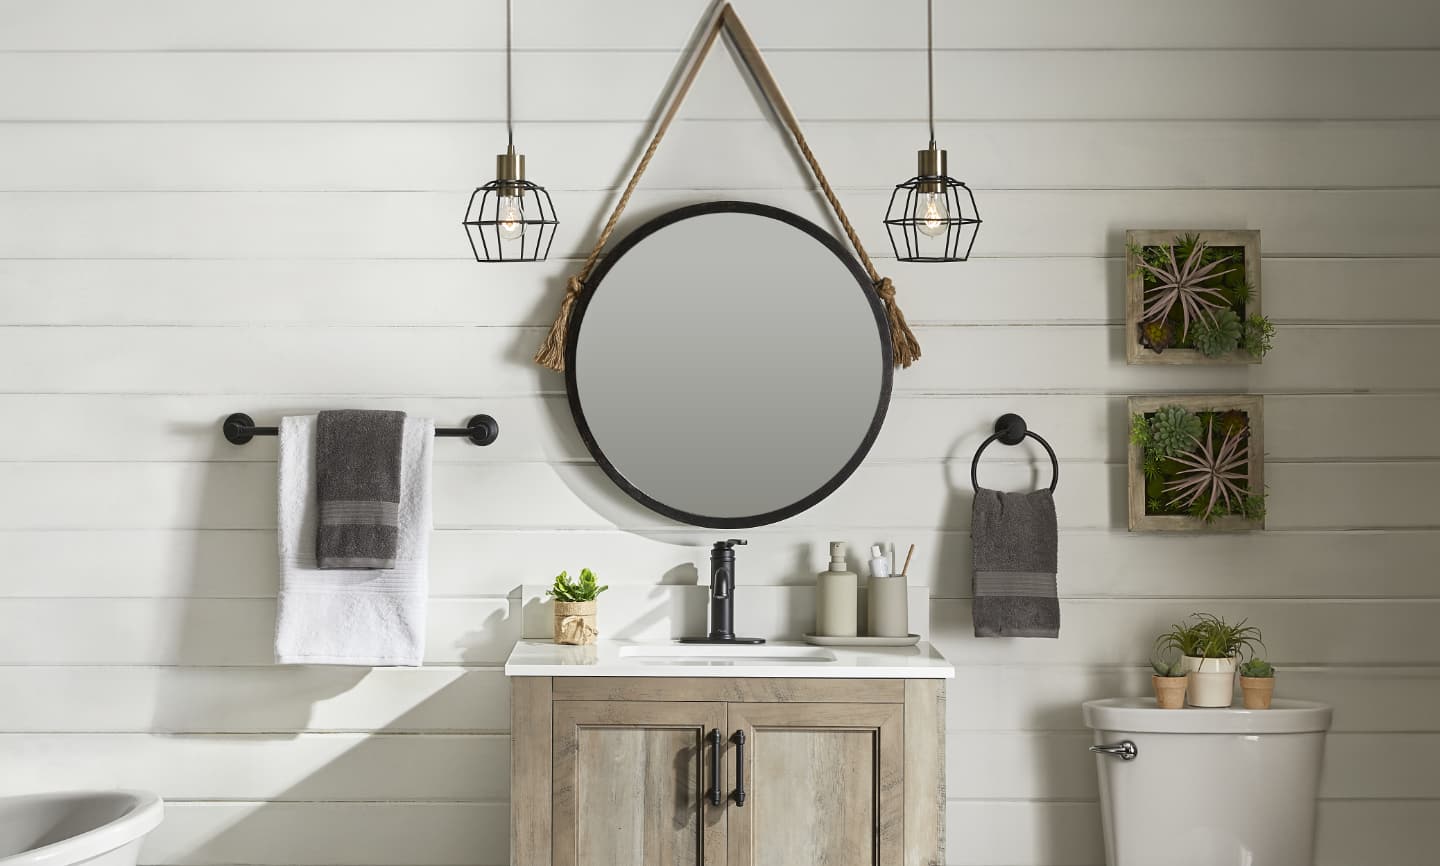 A circular mirror hangs on the wall above a vanity in a rustic-look bathroom.